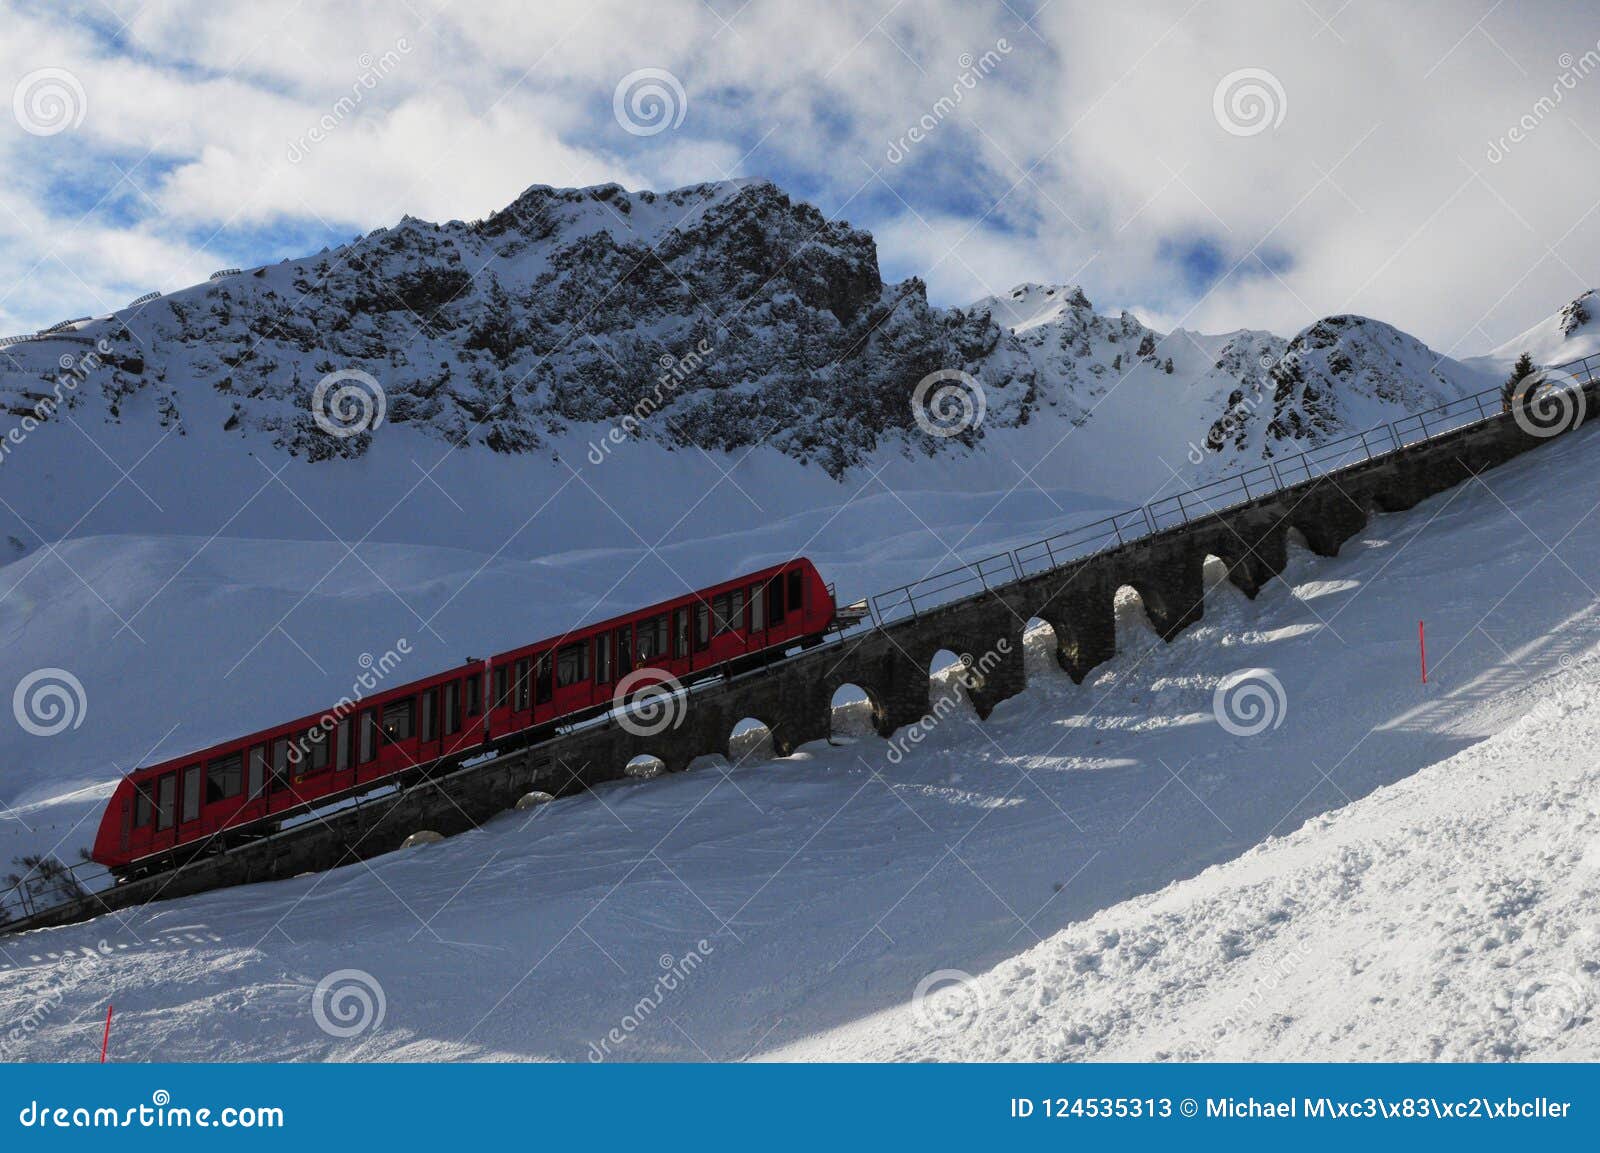 davos: the parsenn-transport for the wintersport region weissfluhjoch